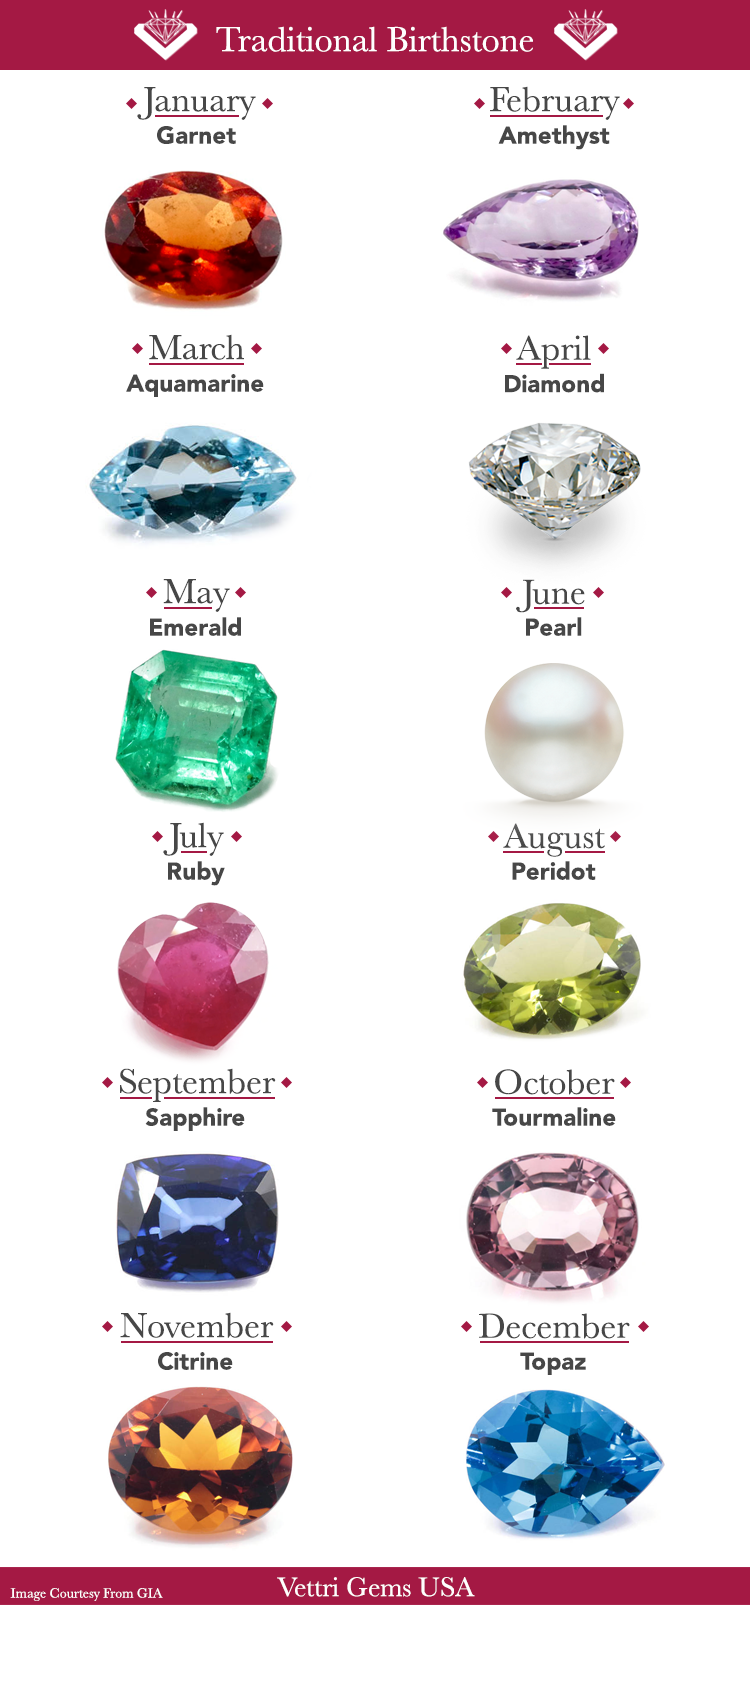 Crystal Gems, Crystals And Gemstones, Stones And Crystals, Gemstones